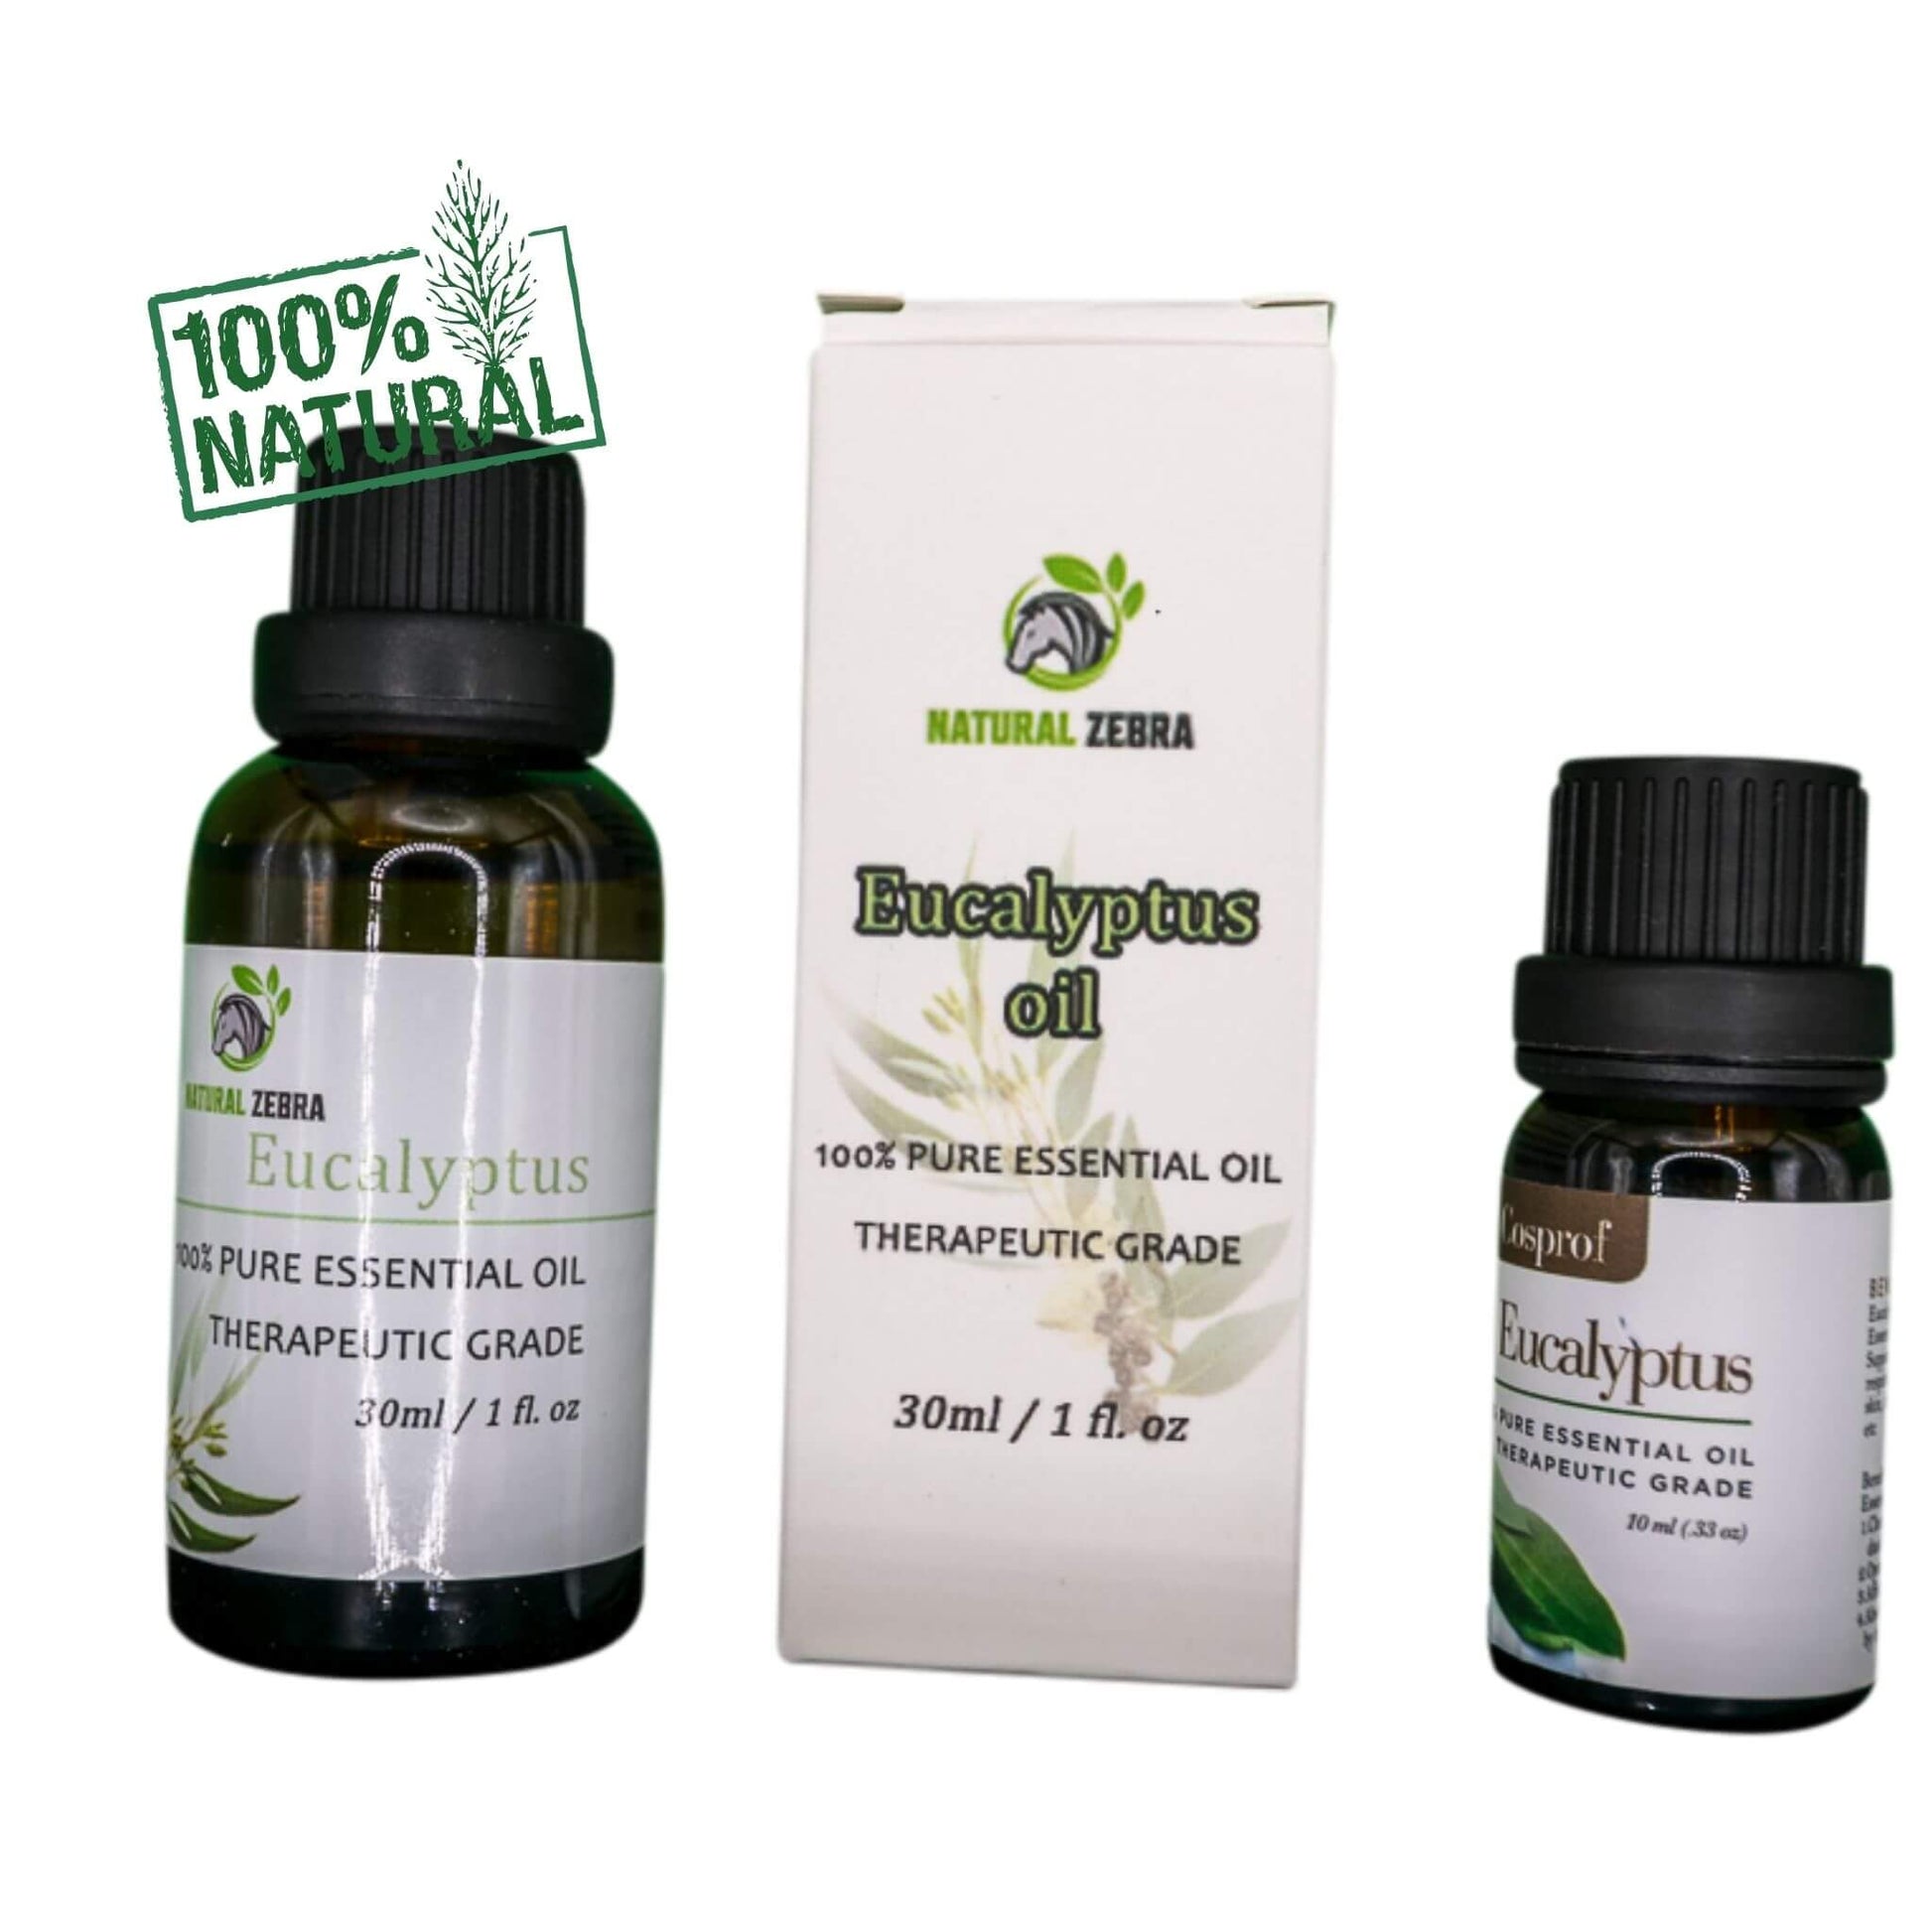 NATURAL ZEBRA | Eucalyptus Essential Oil -